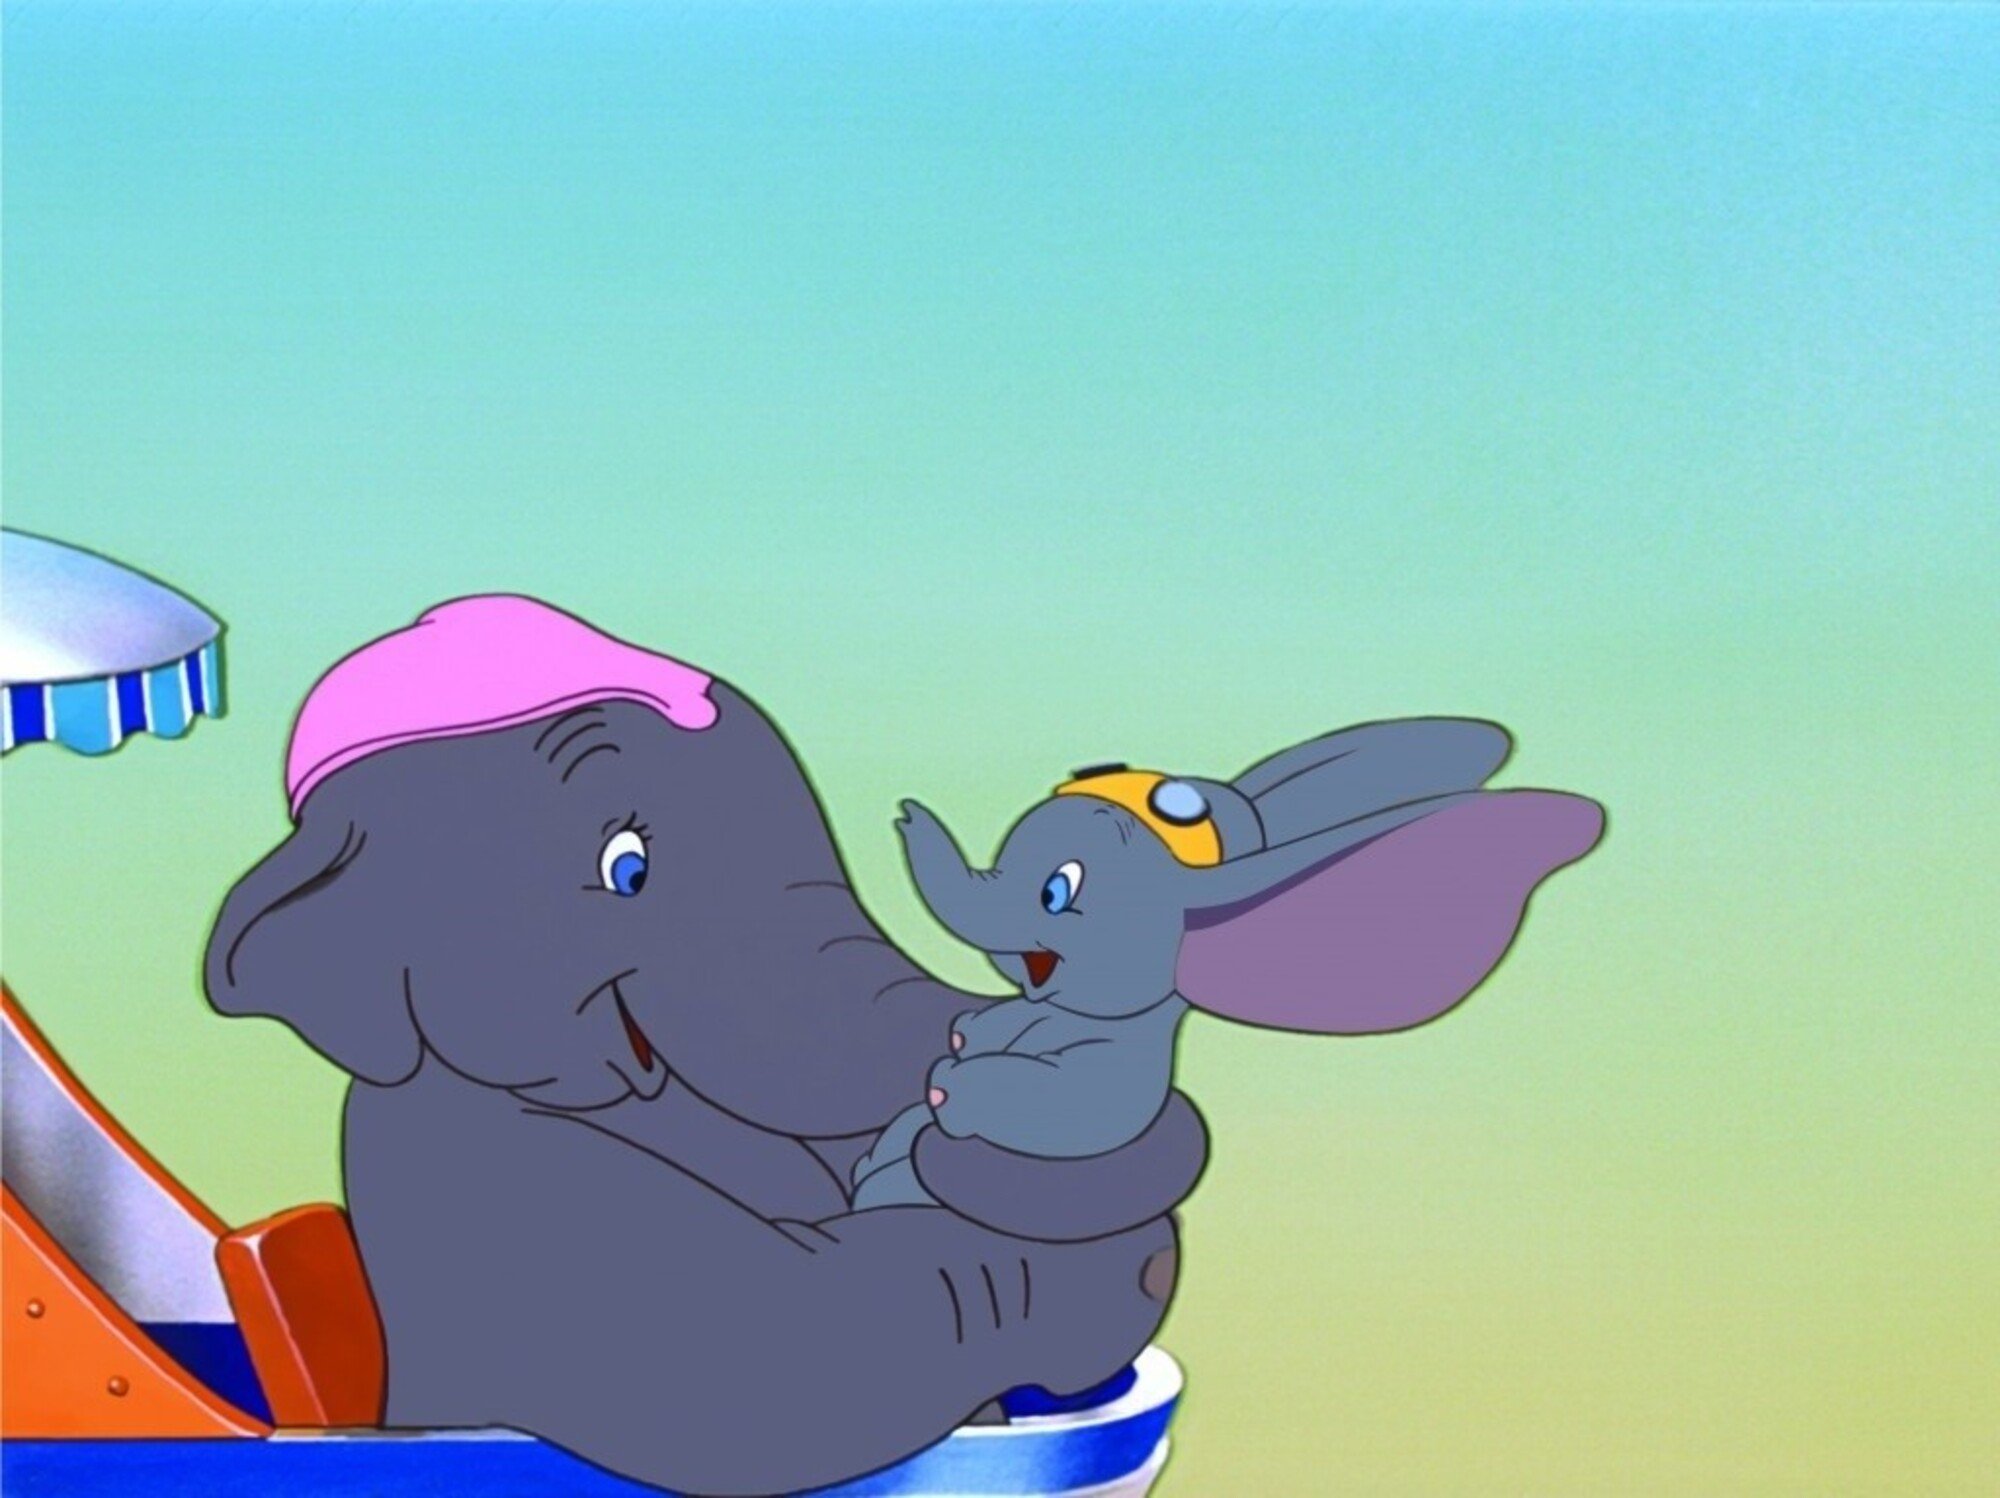 Disney retira 'Dumbo' y 'Peter Pan' de su catálogo infantil por clichés racistas